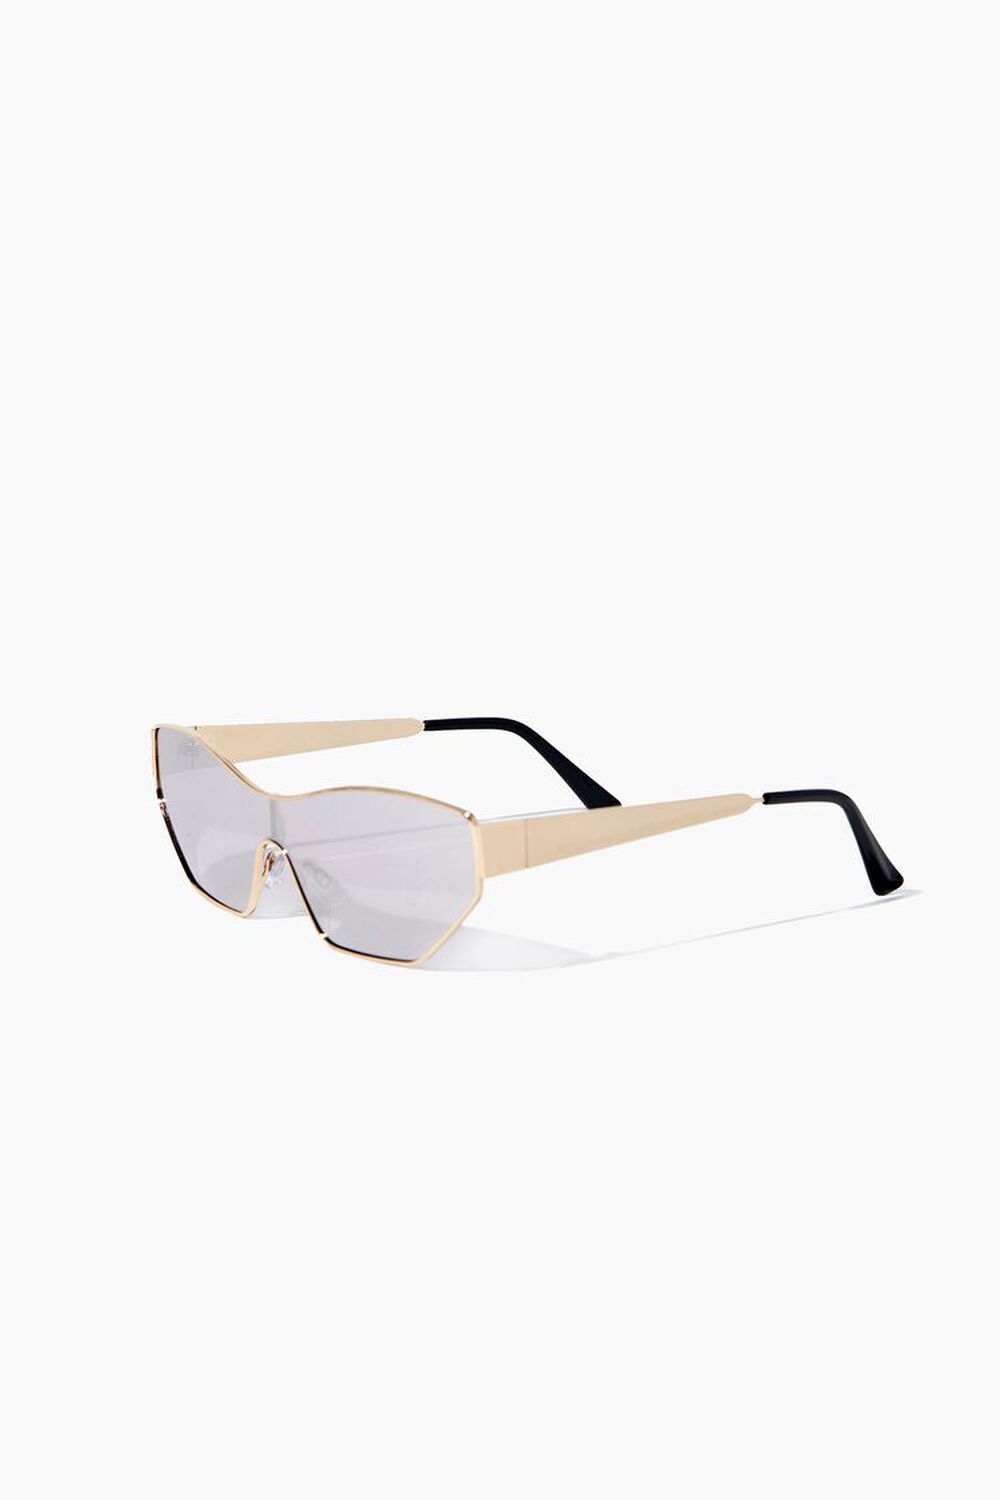 ROSE GOLD/ROSE Oval Frame Shield Sunglasses, image 2